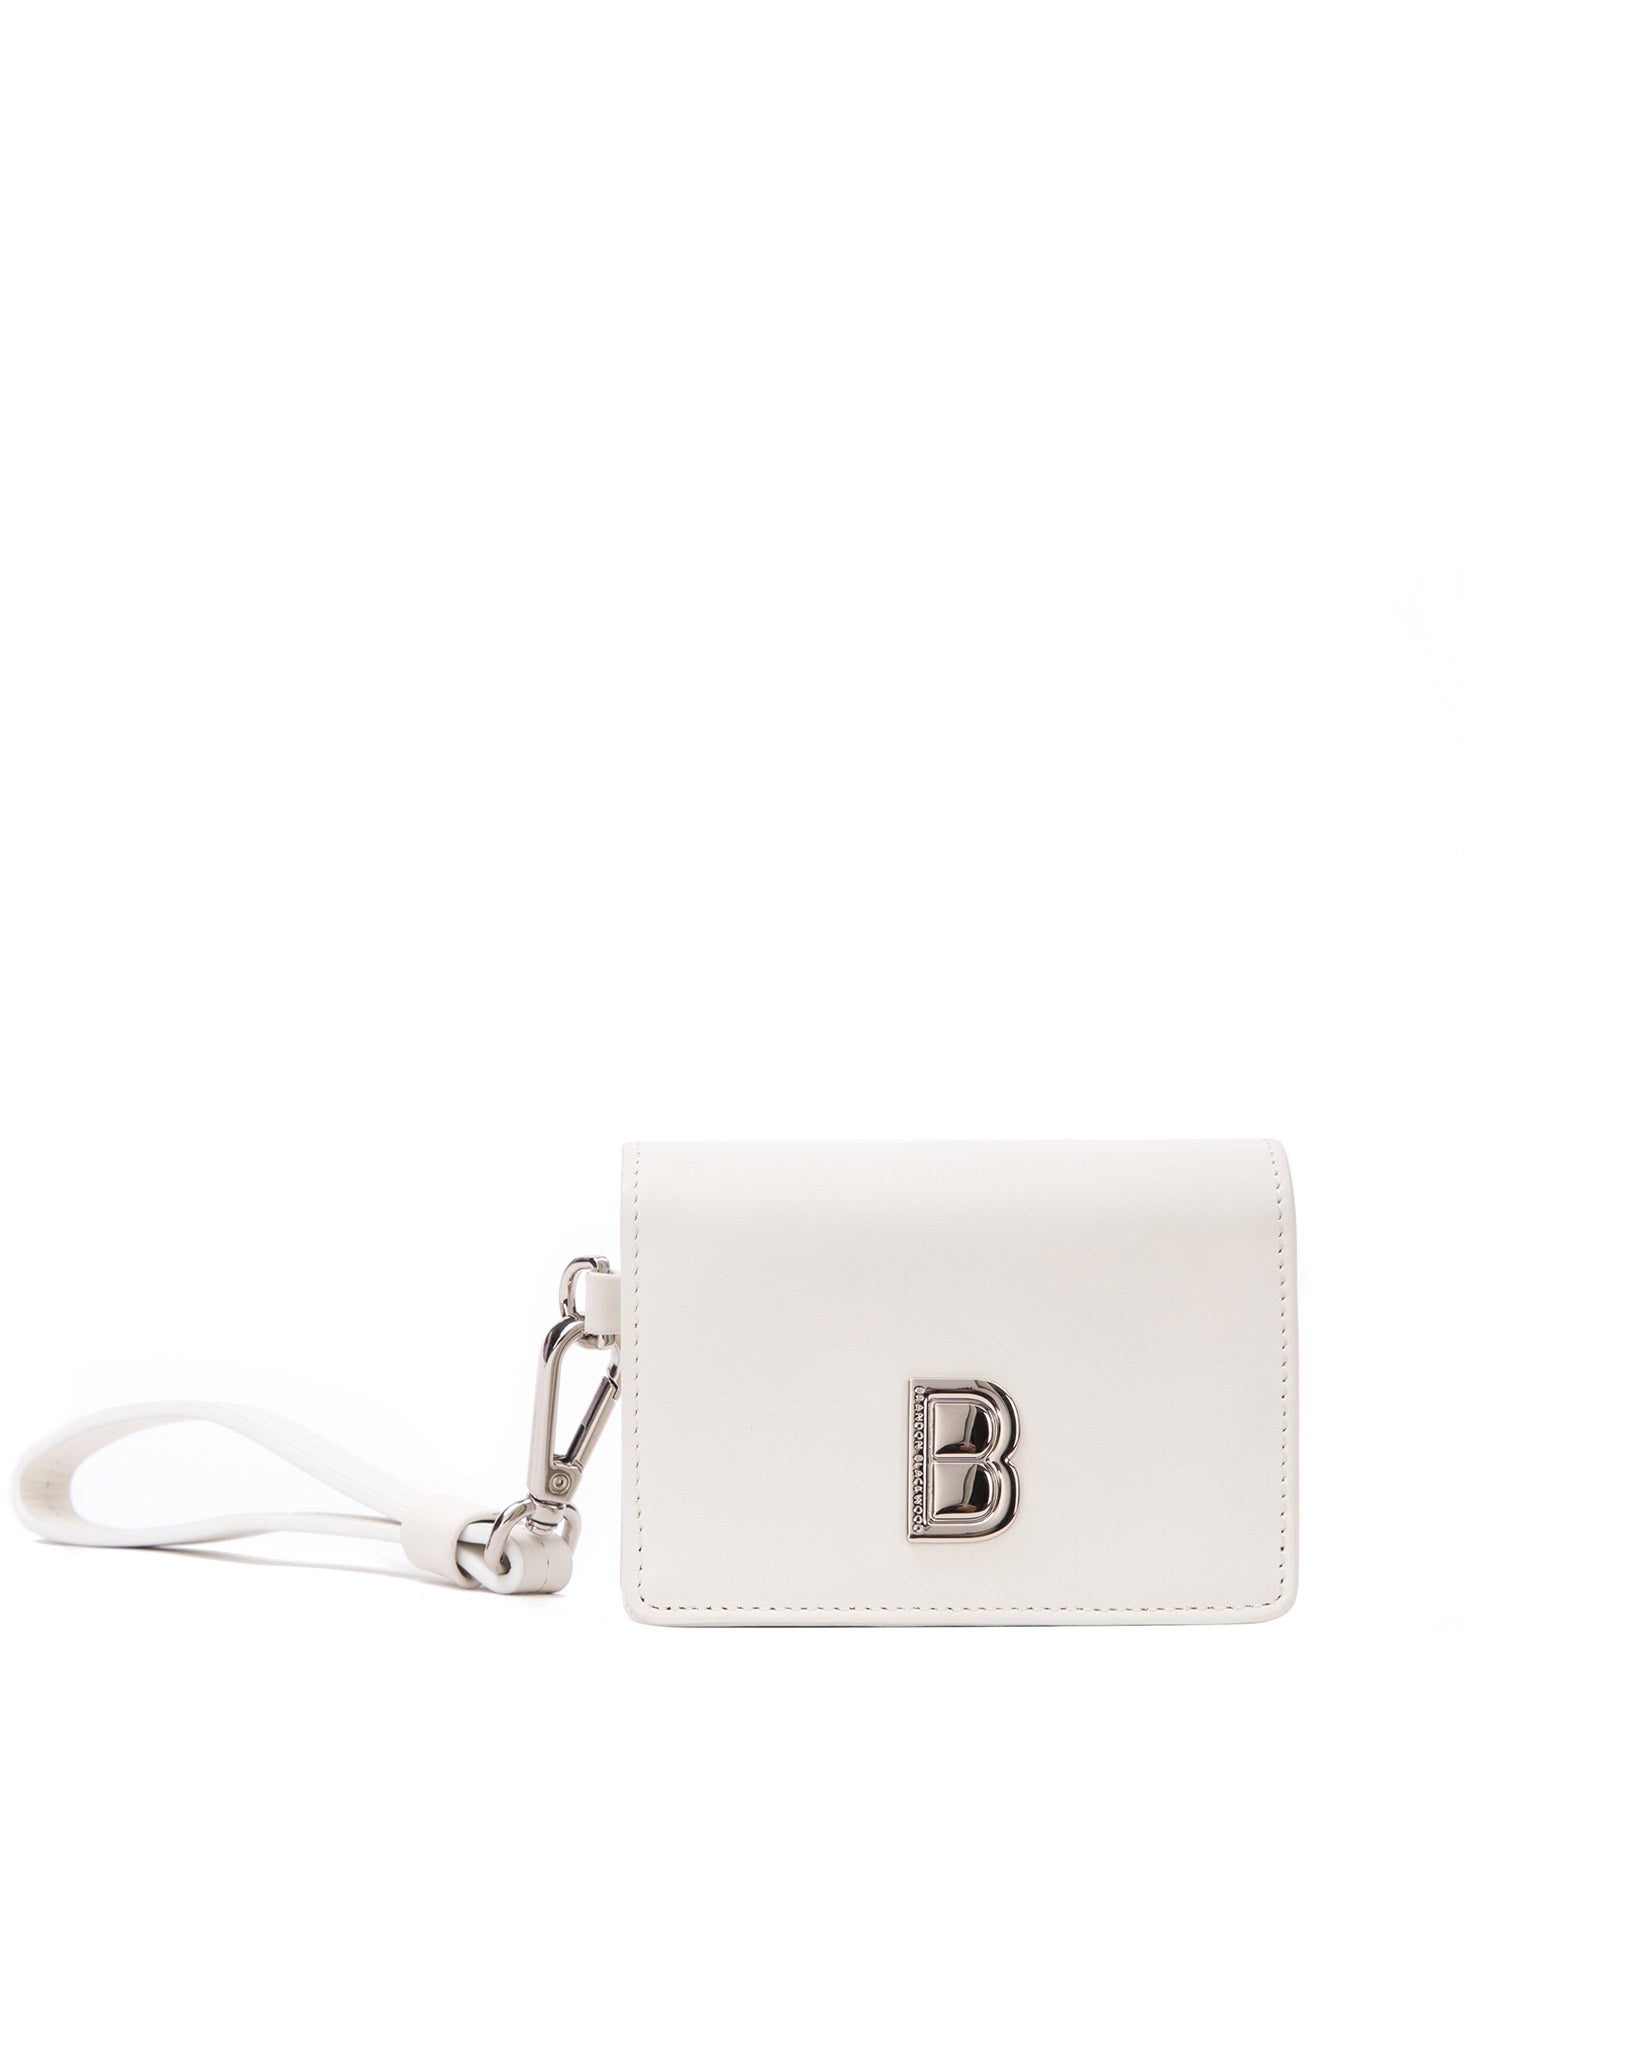 Brandon Blackwood New York - Accordion Card Case - White Leather